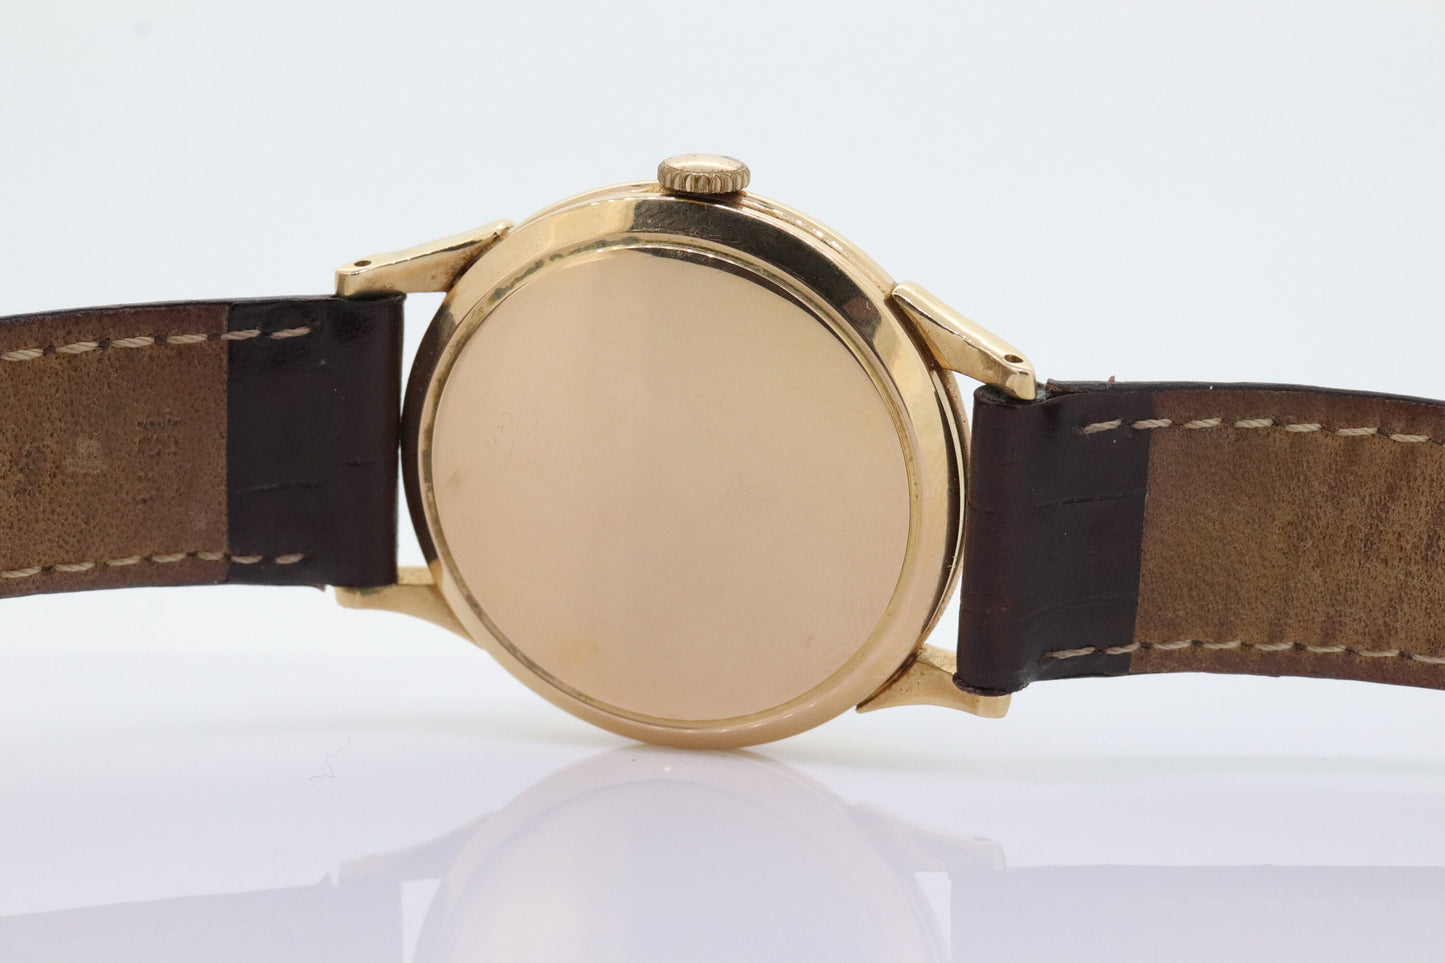 18K LONGINES Watch. Longines 18k Rose Gold Manual Watch. 30 Caliber 35mm ROUND Case